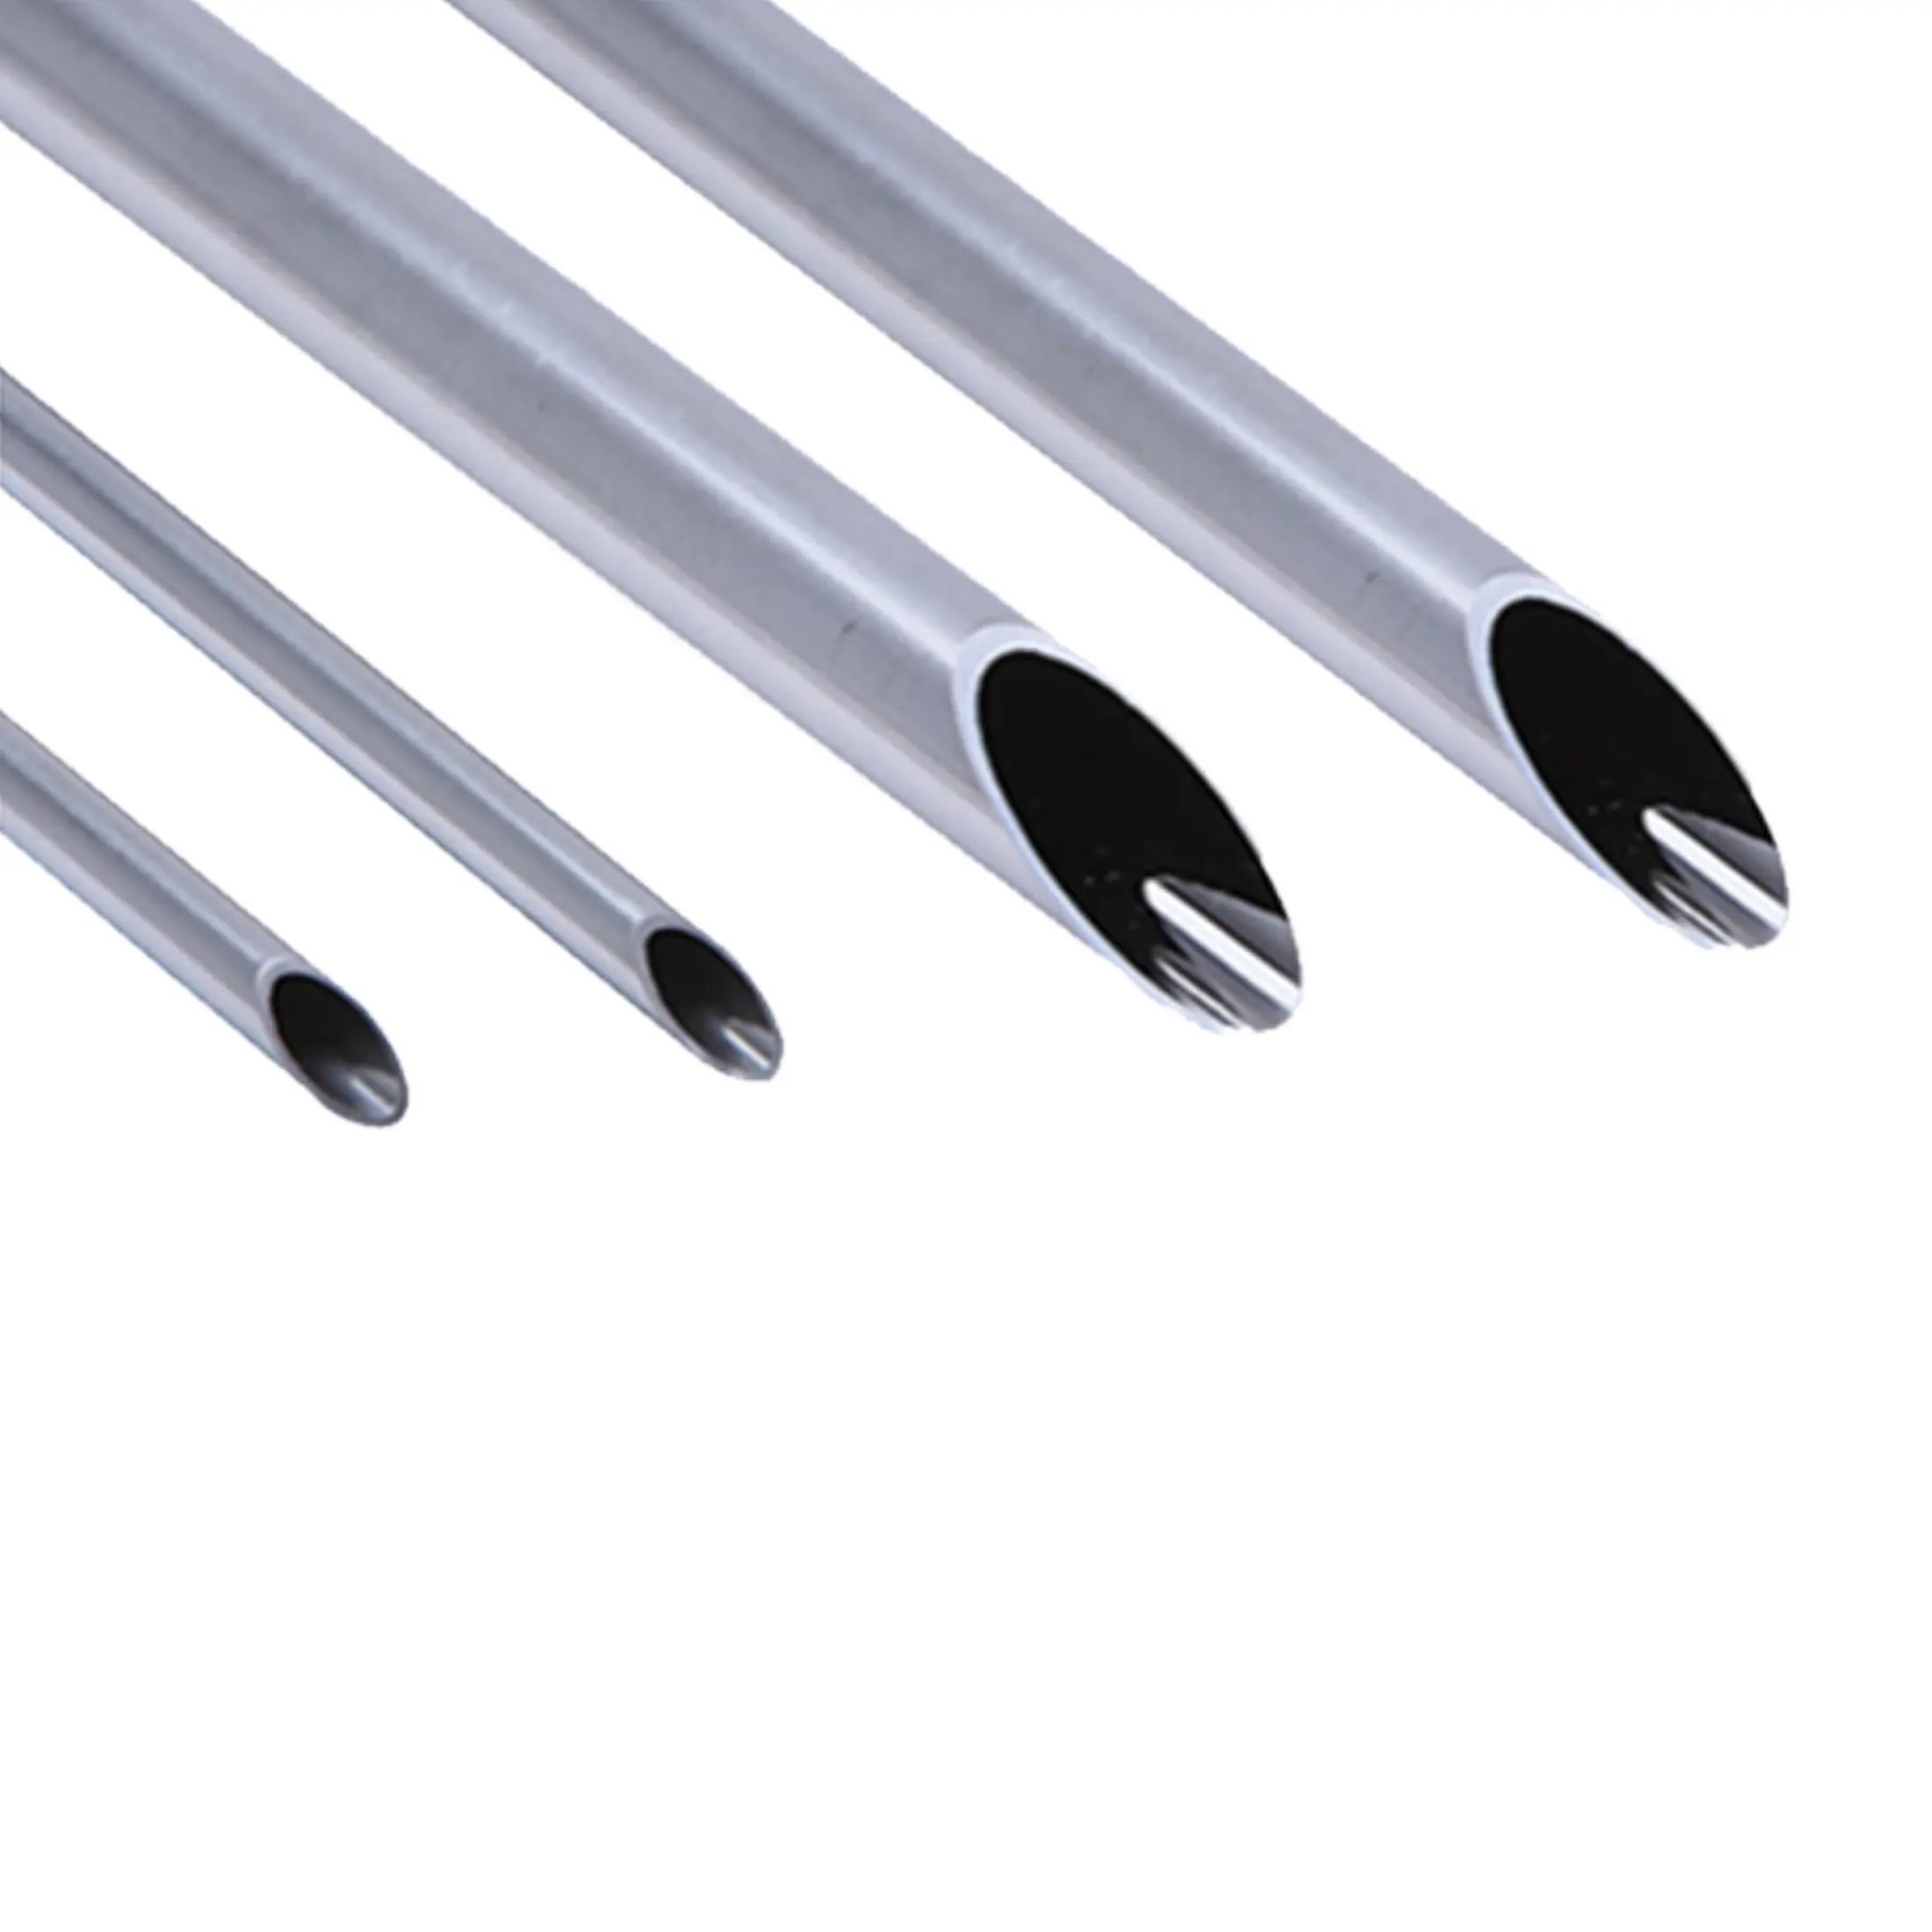 Seerein DIN JIS GB ASTM 201 304 316L acciaio inossidabile BPE tubo, tubi decorativi, tubi dell'acqua potabile